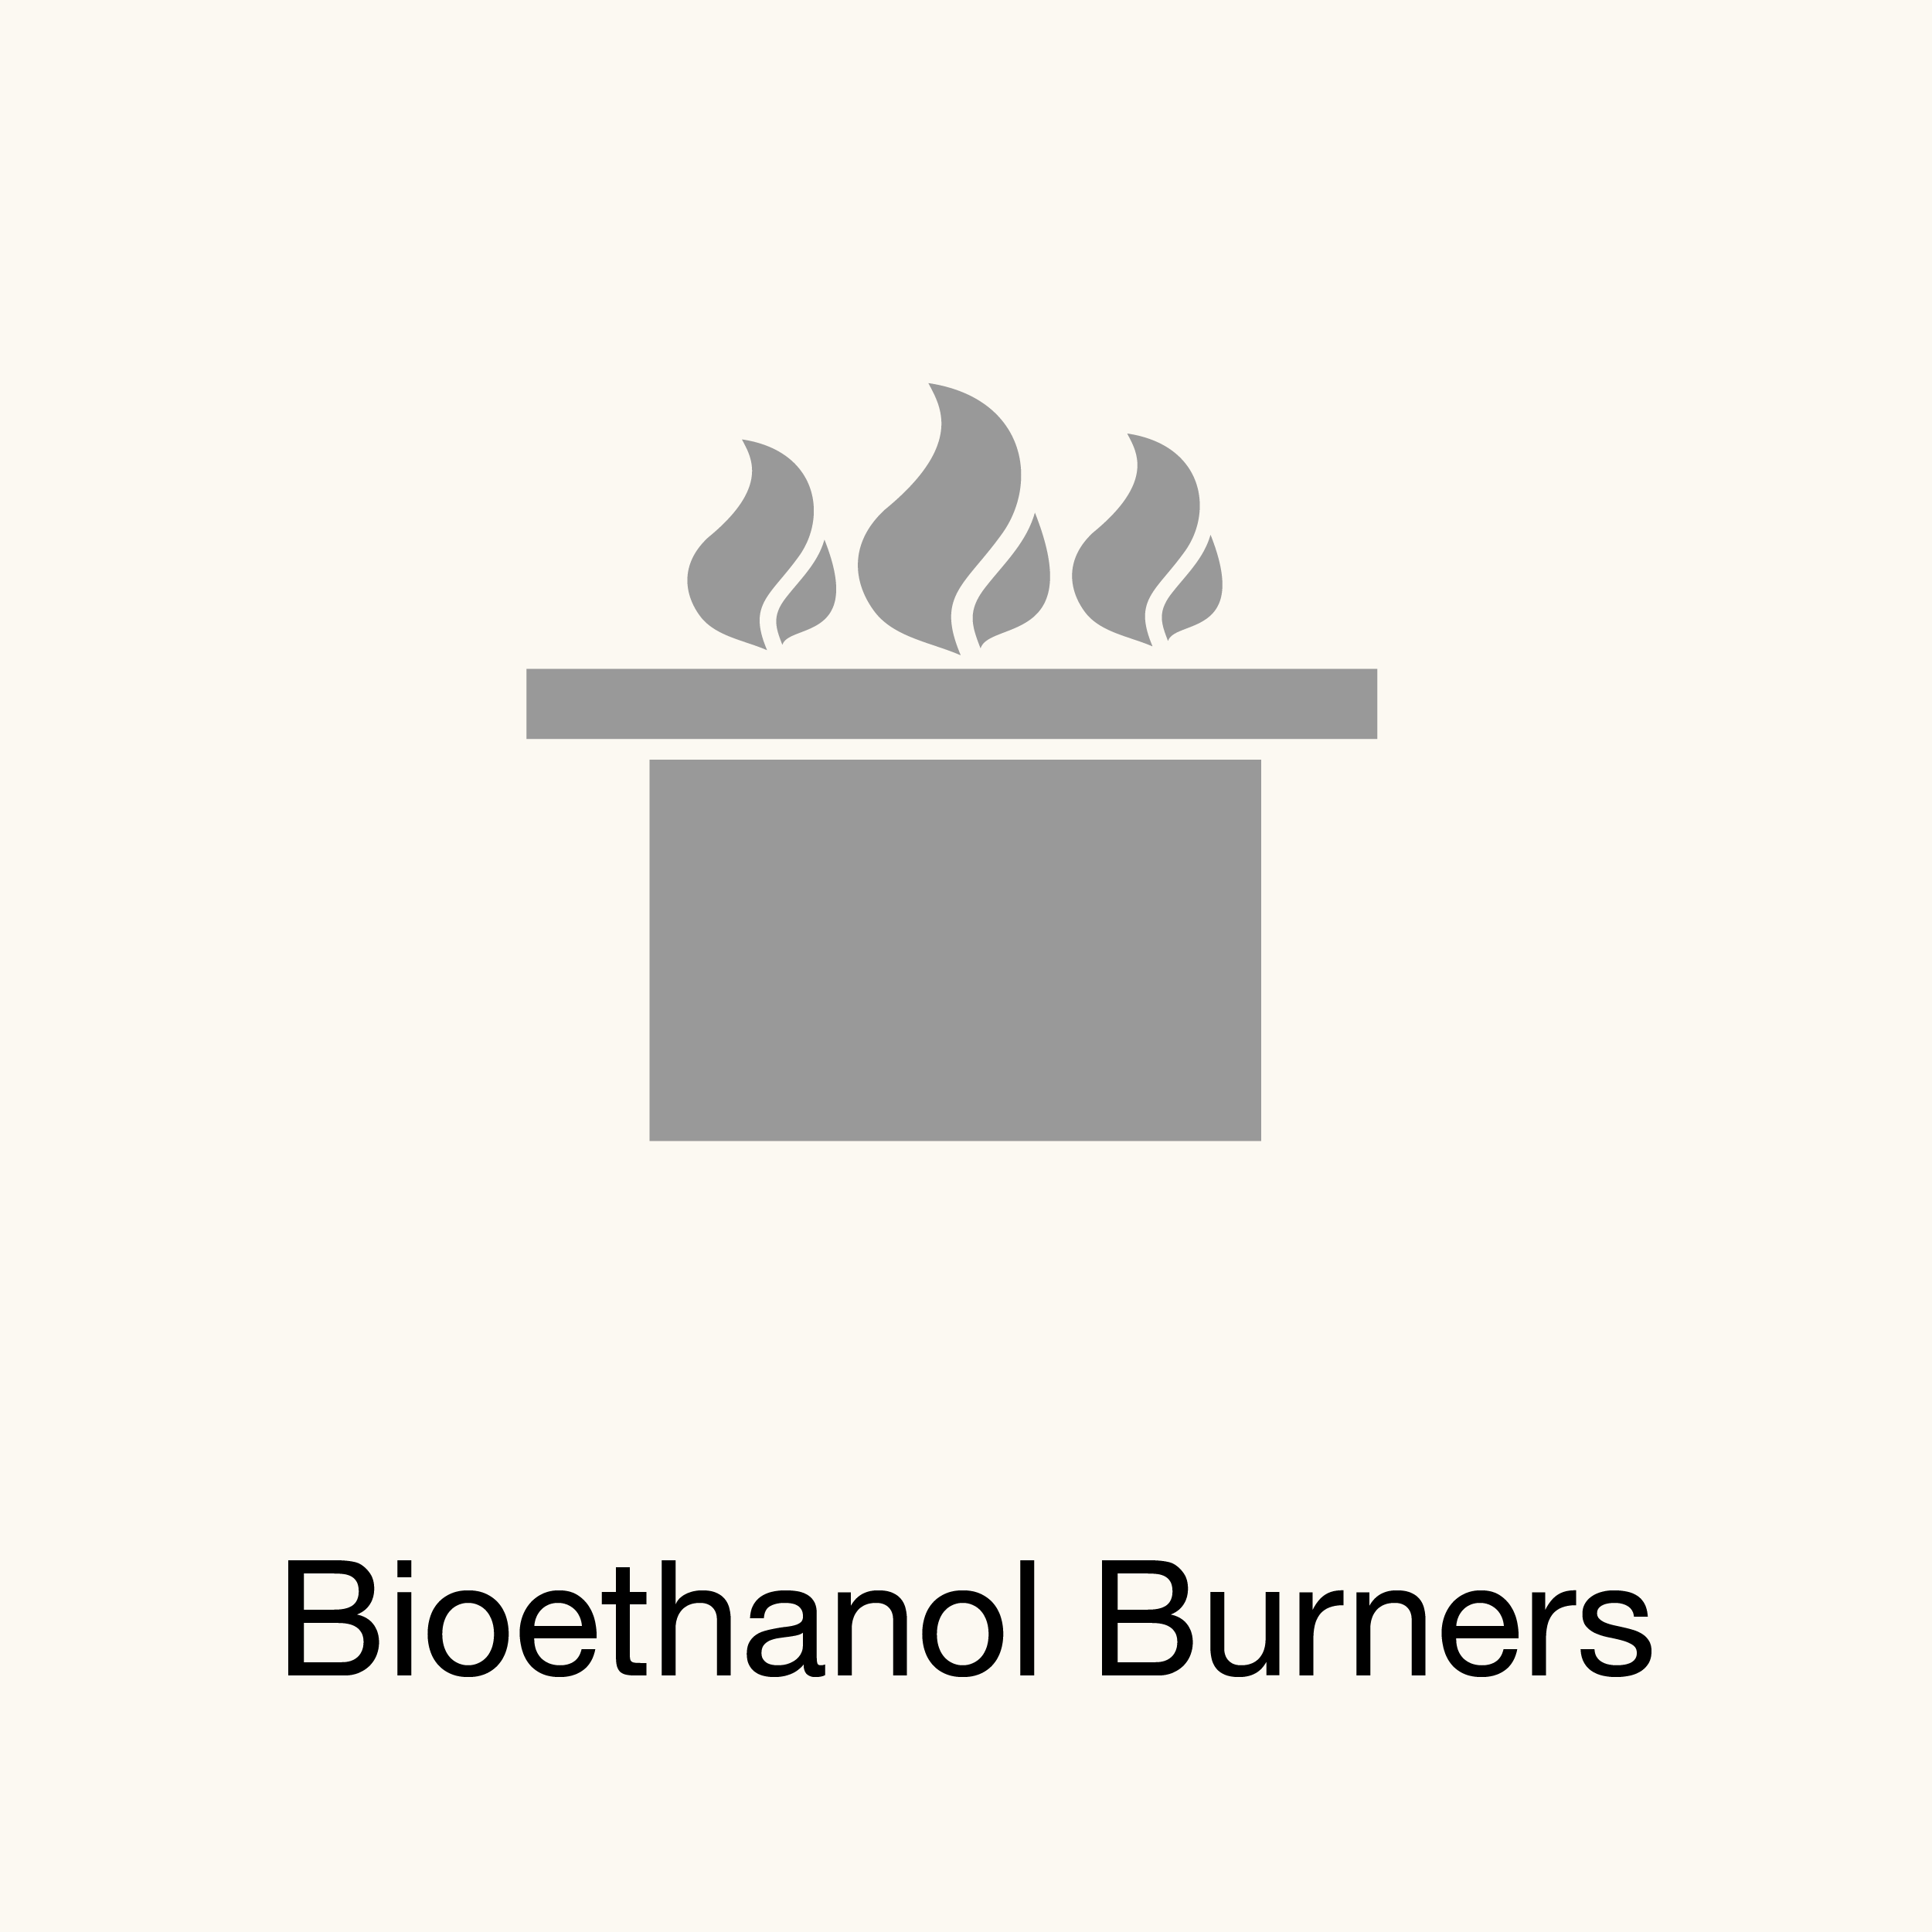 Bioethanol Burners